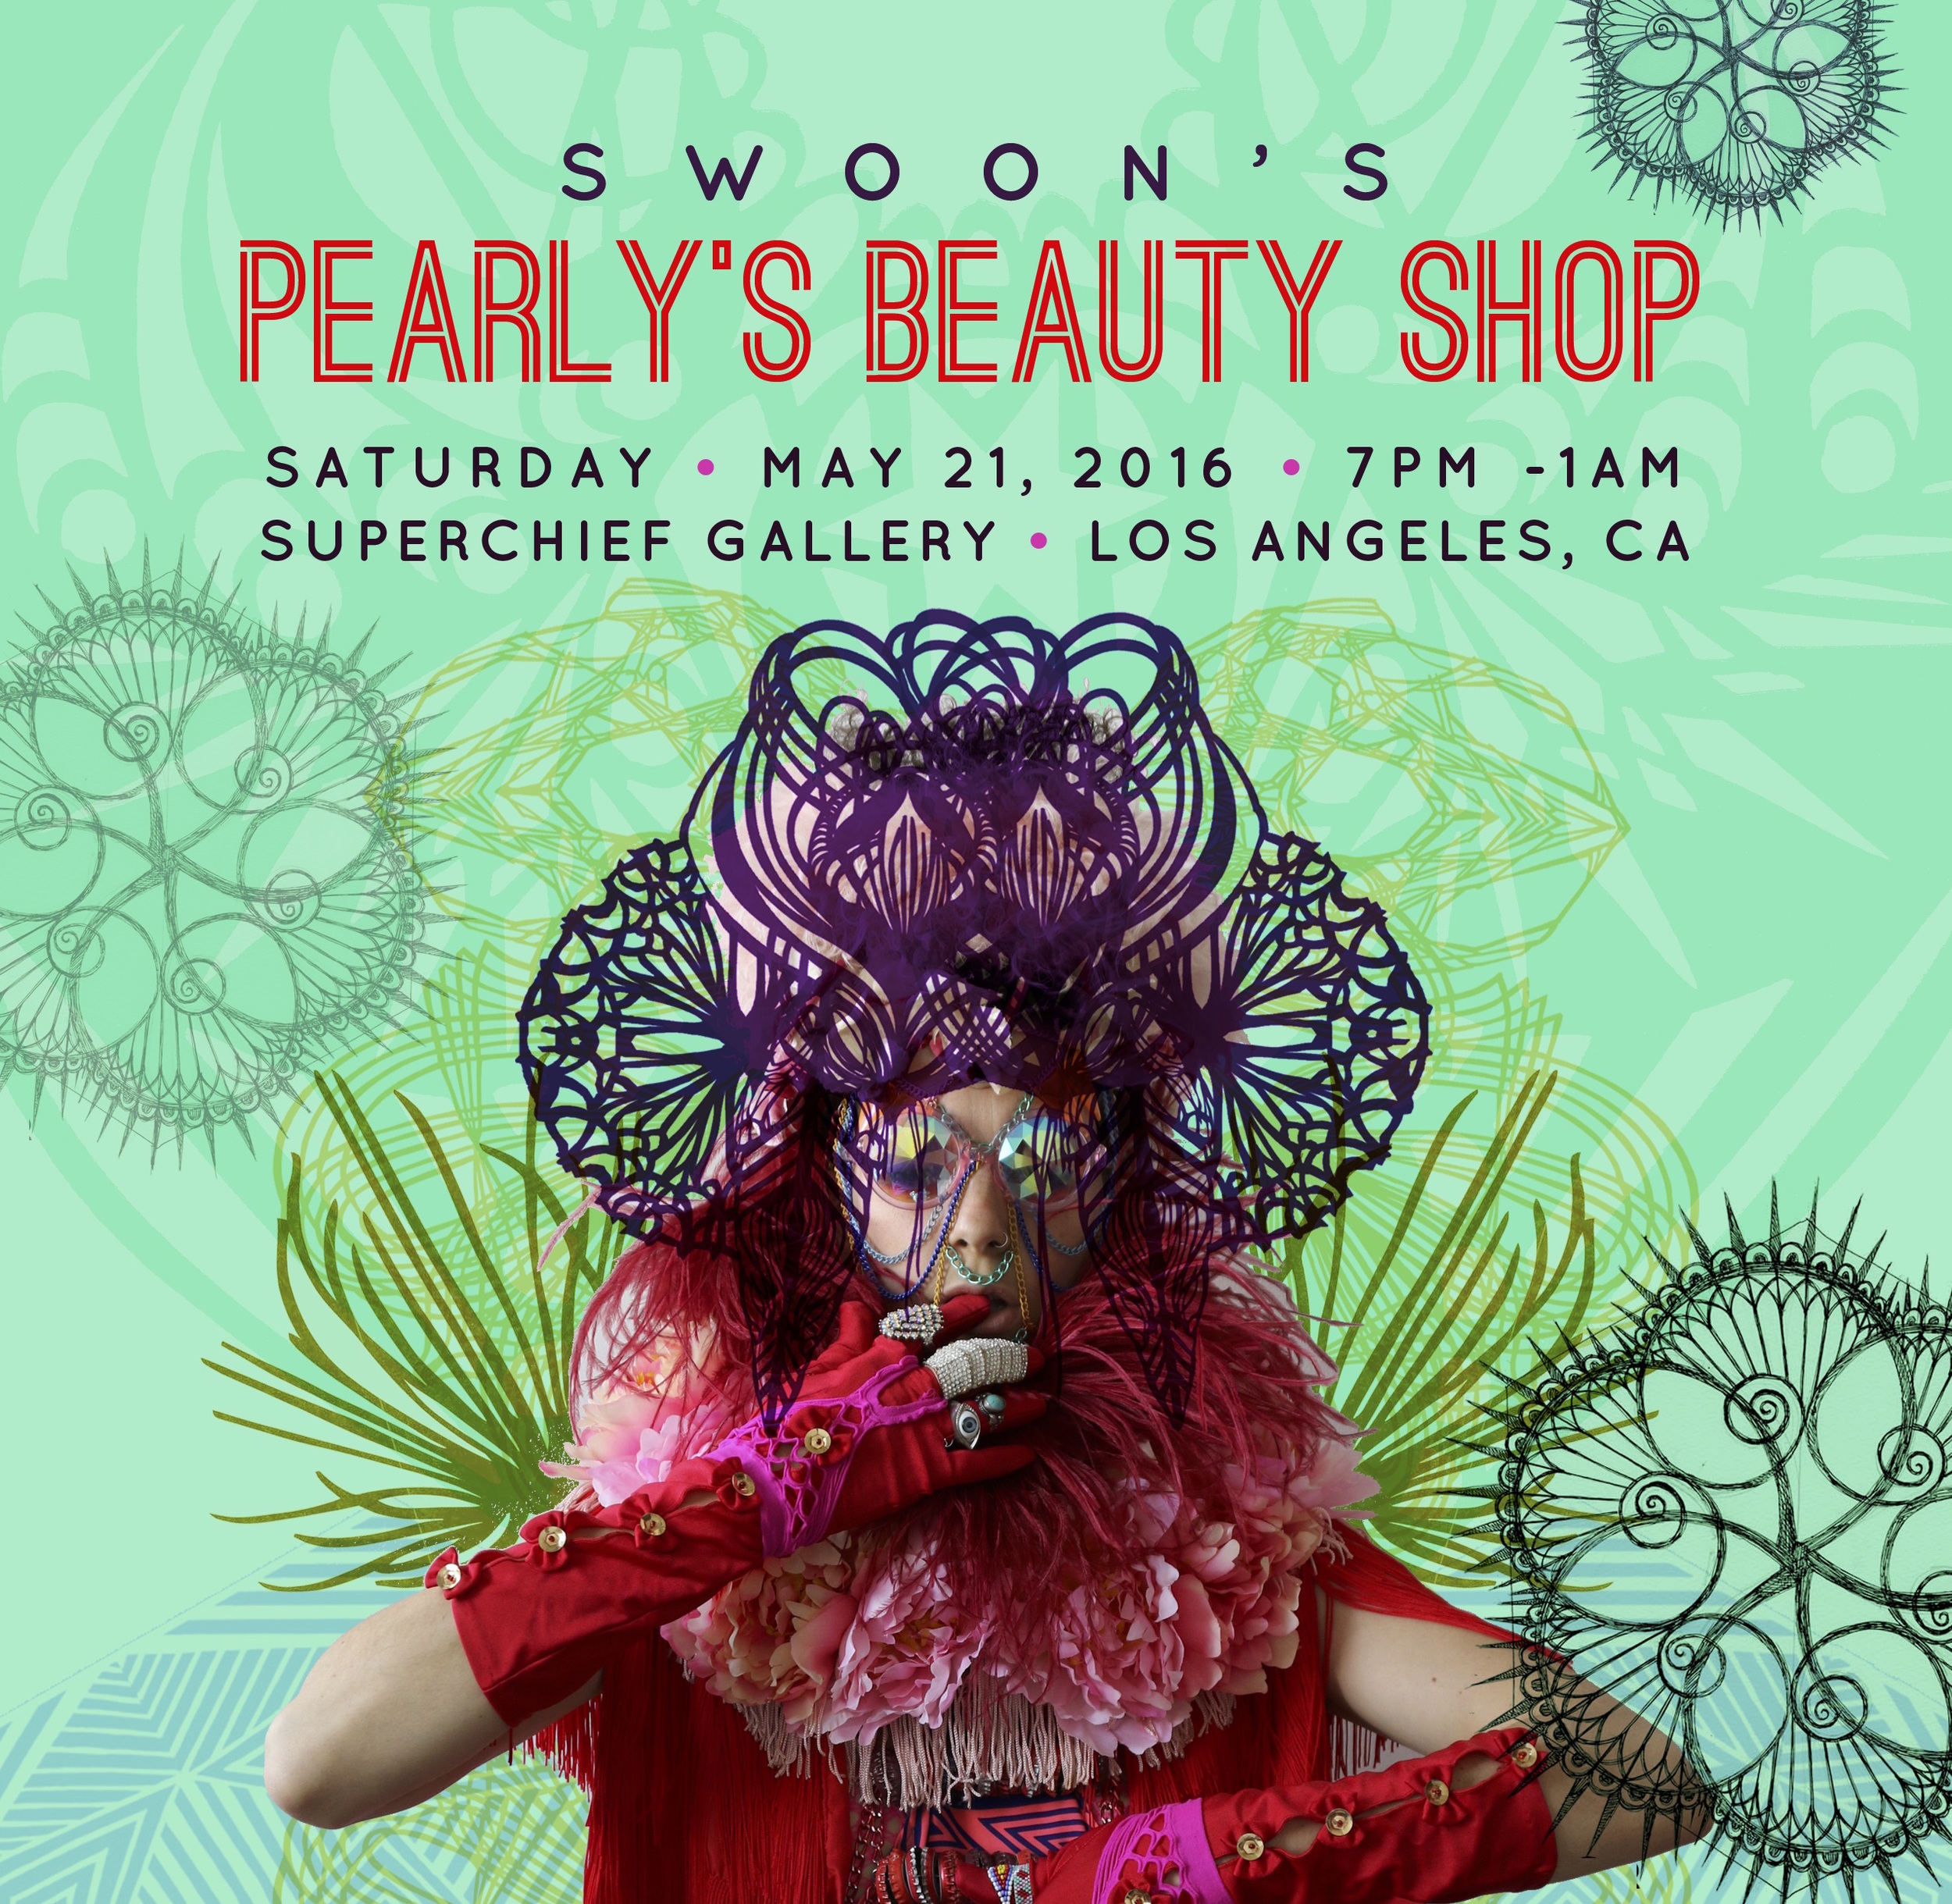 Pearly's Beauty Shop promo.jpg